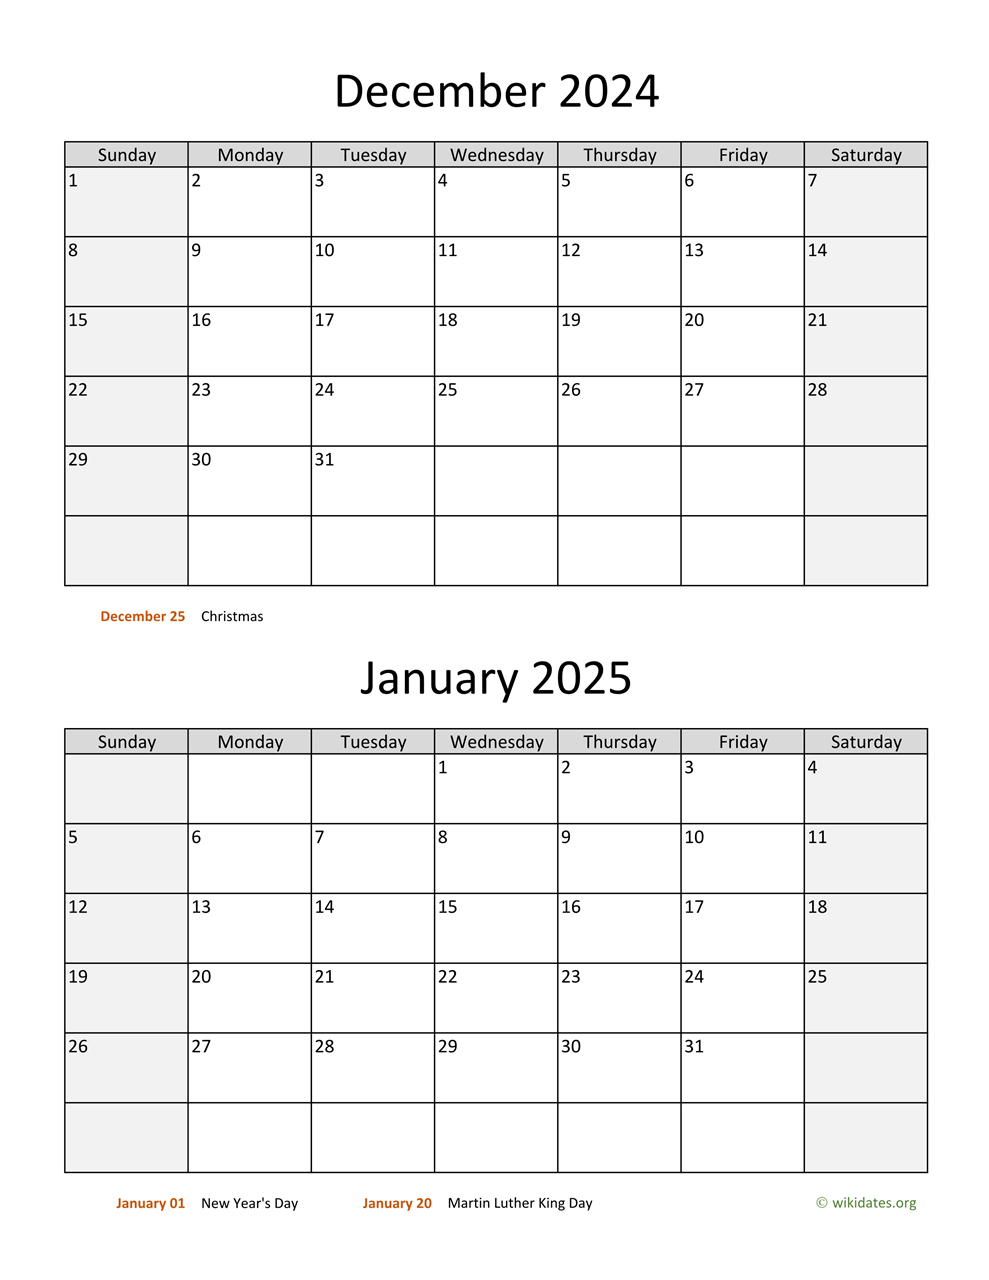 December 2024 And January 2025 Calendar | Wikidates for January - December 2024 Calendar Printable